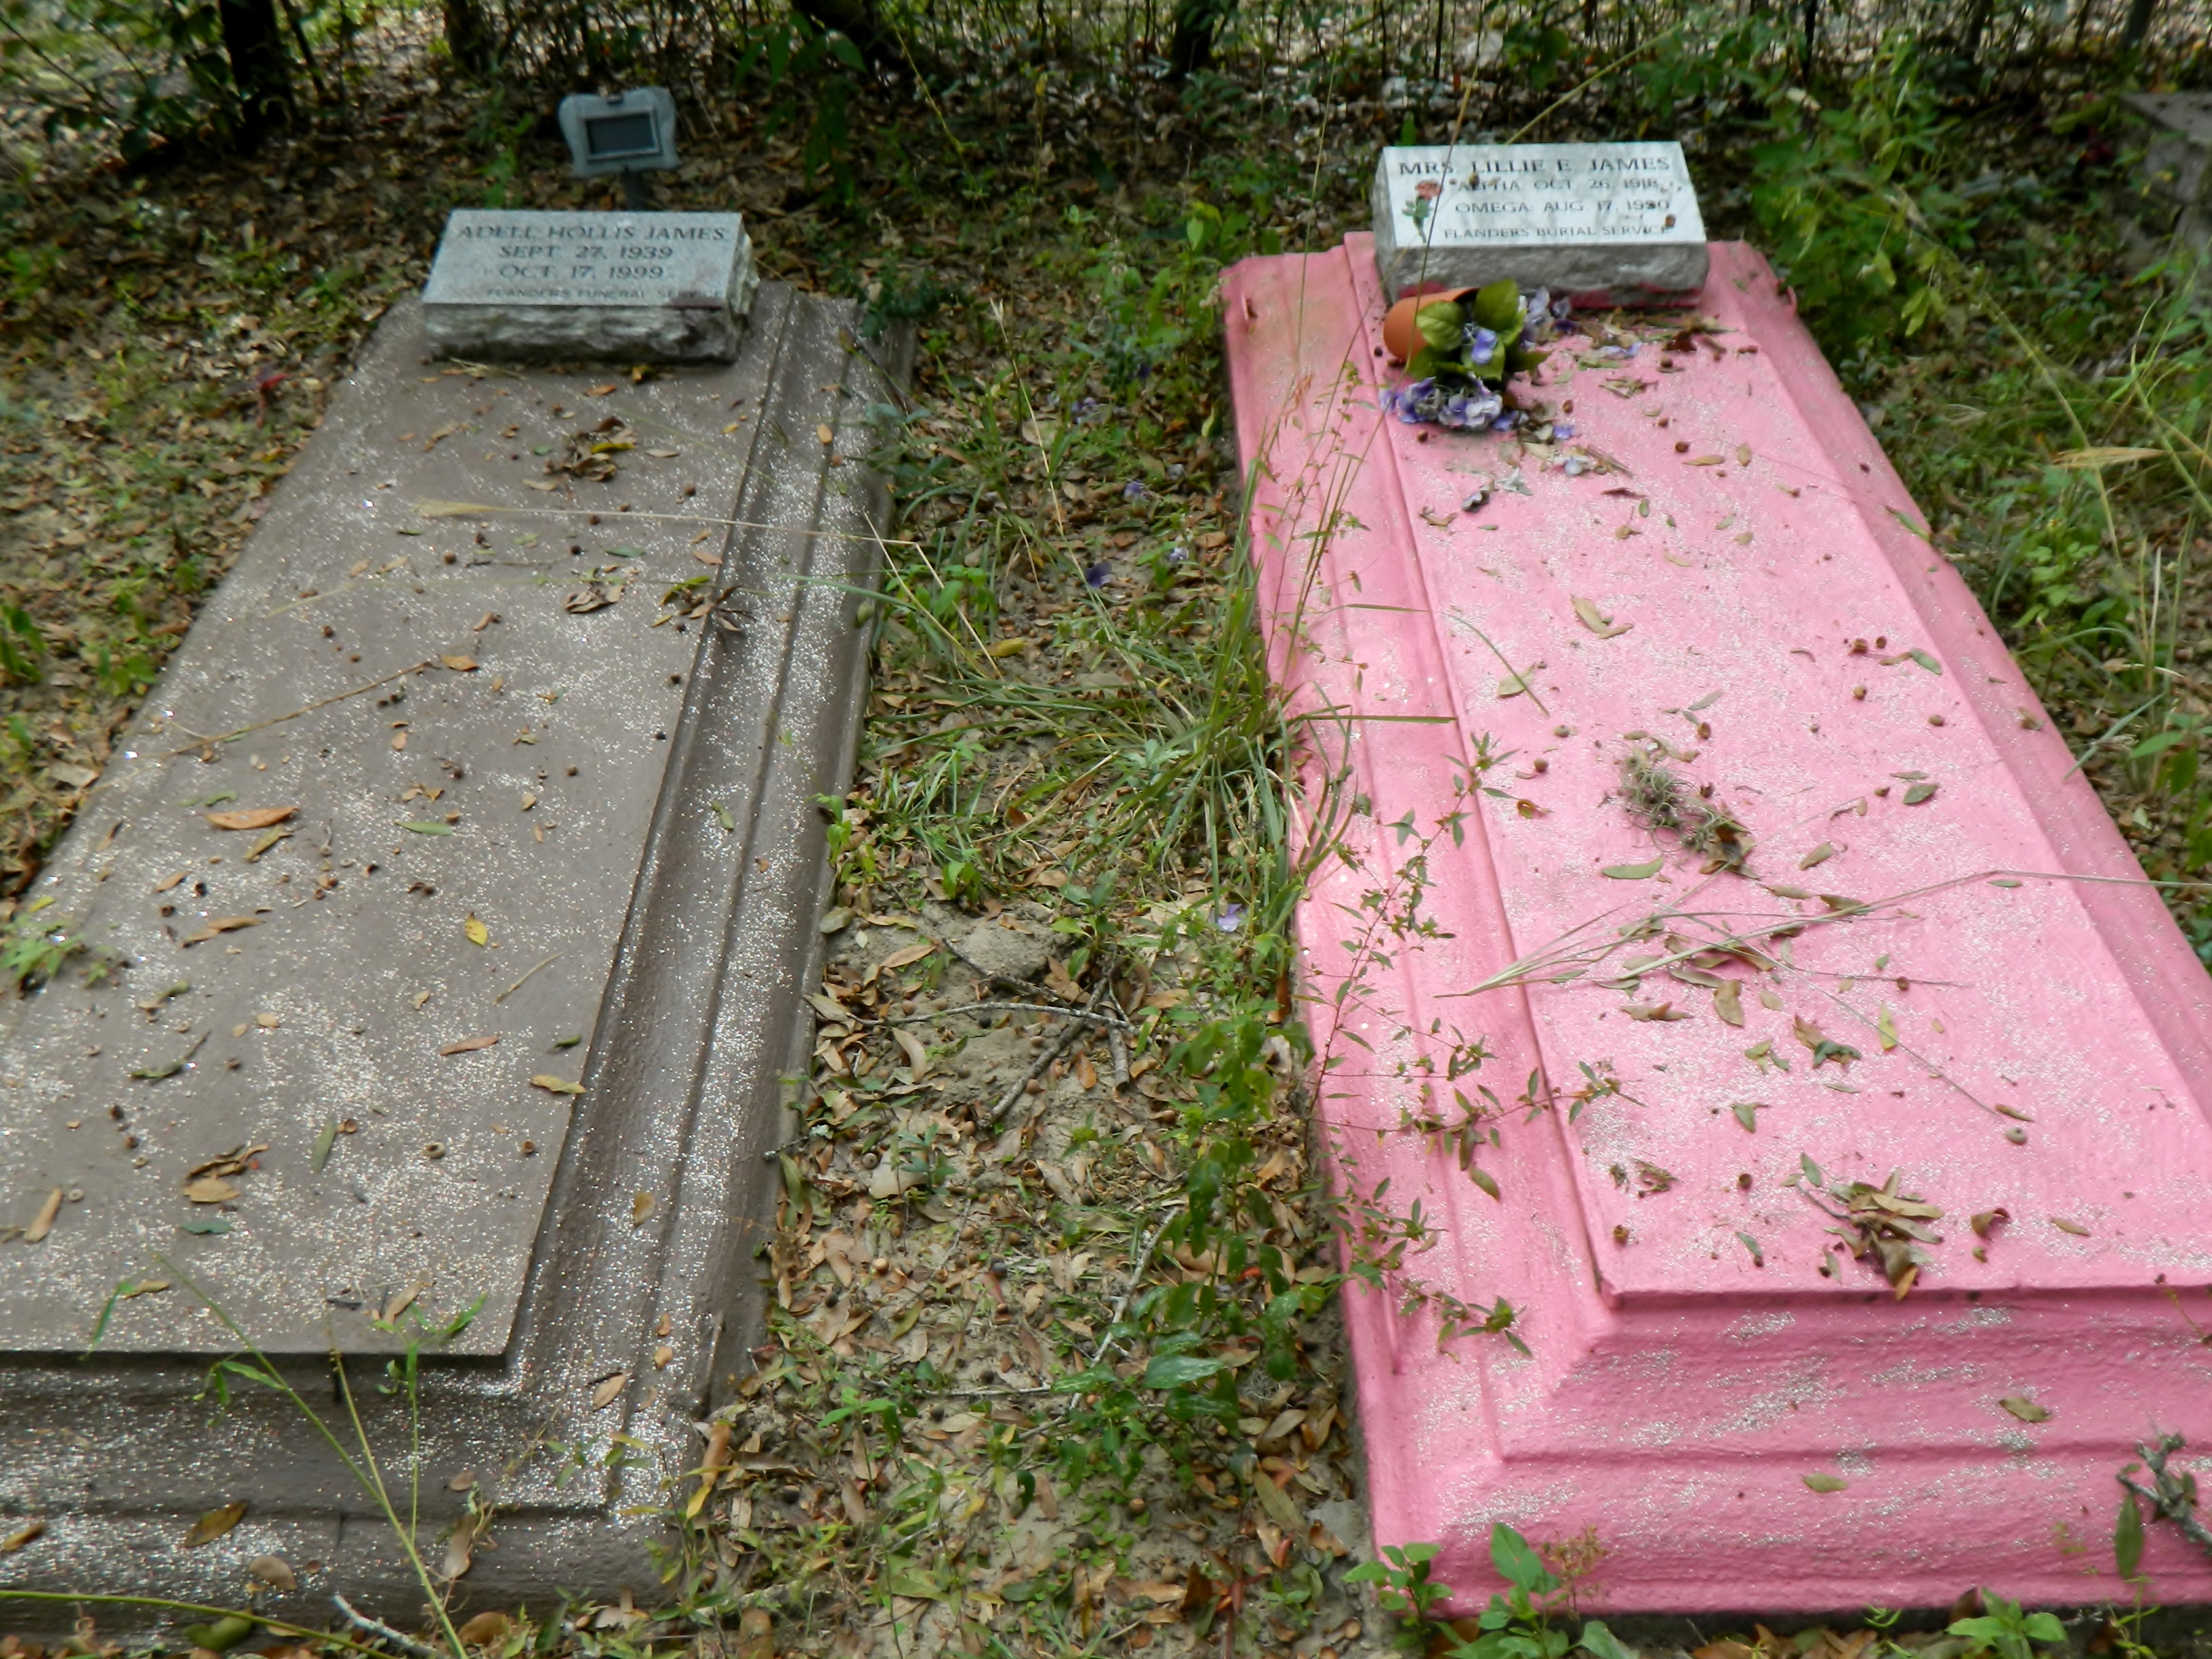 http://candlesmokechapel.files.wordpress.com/2012/11/purple-and-pink-graves.jpg